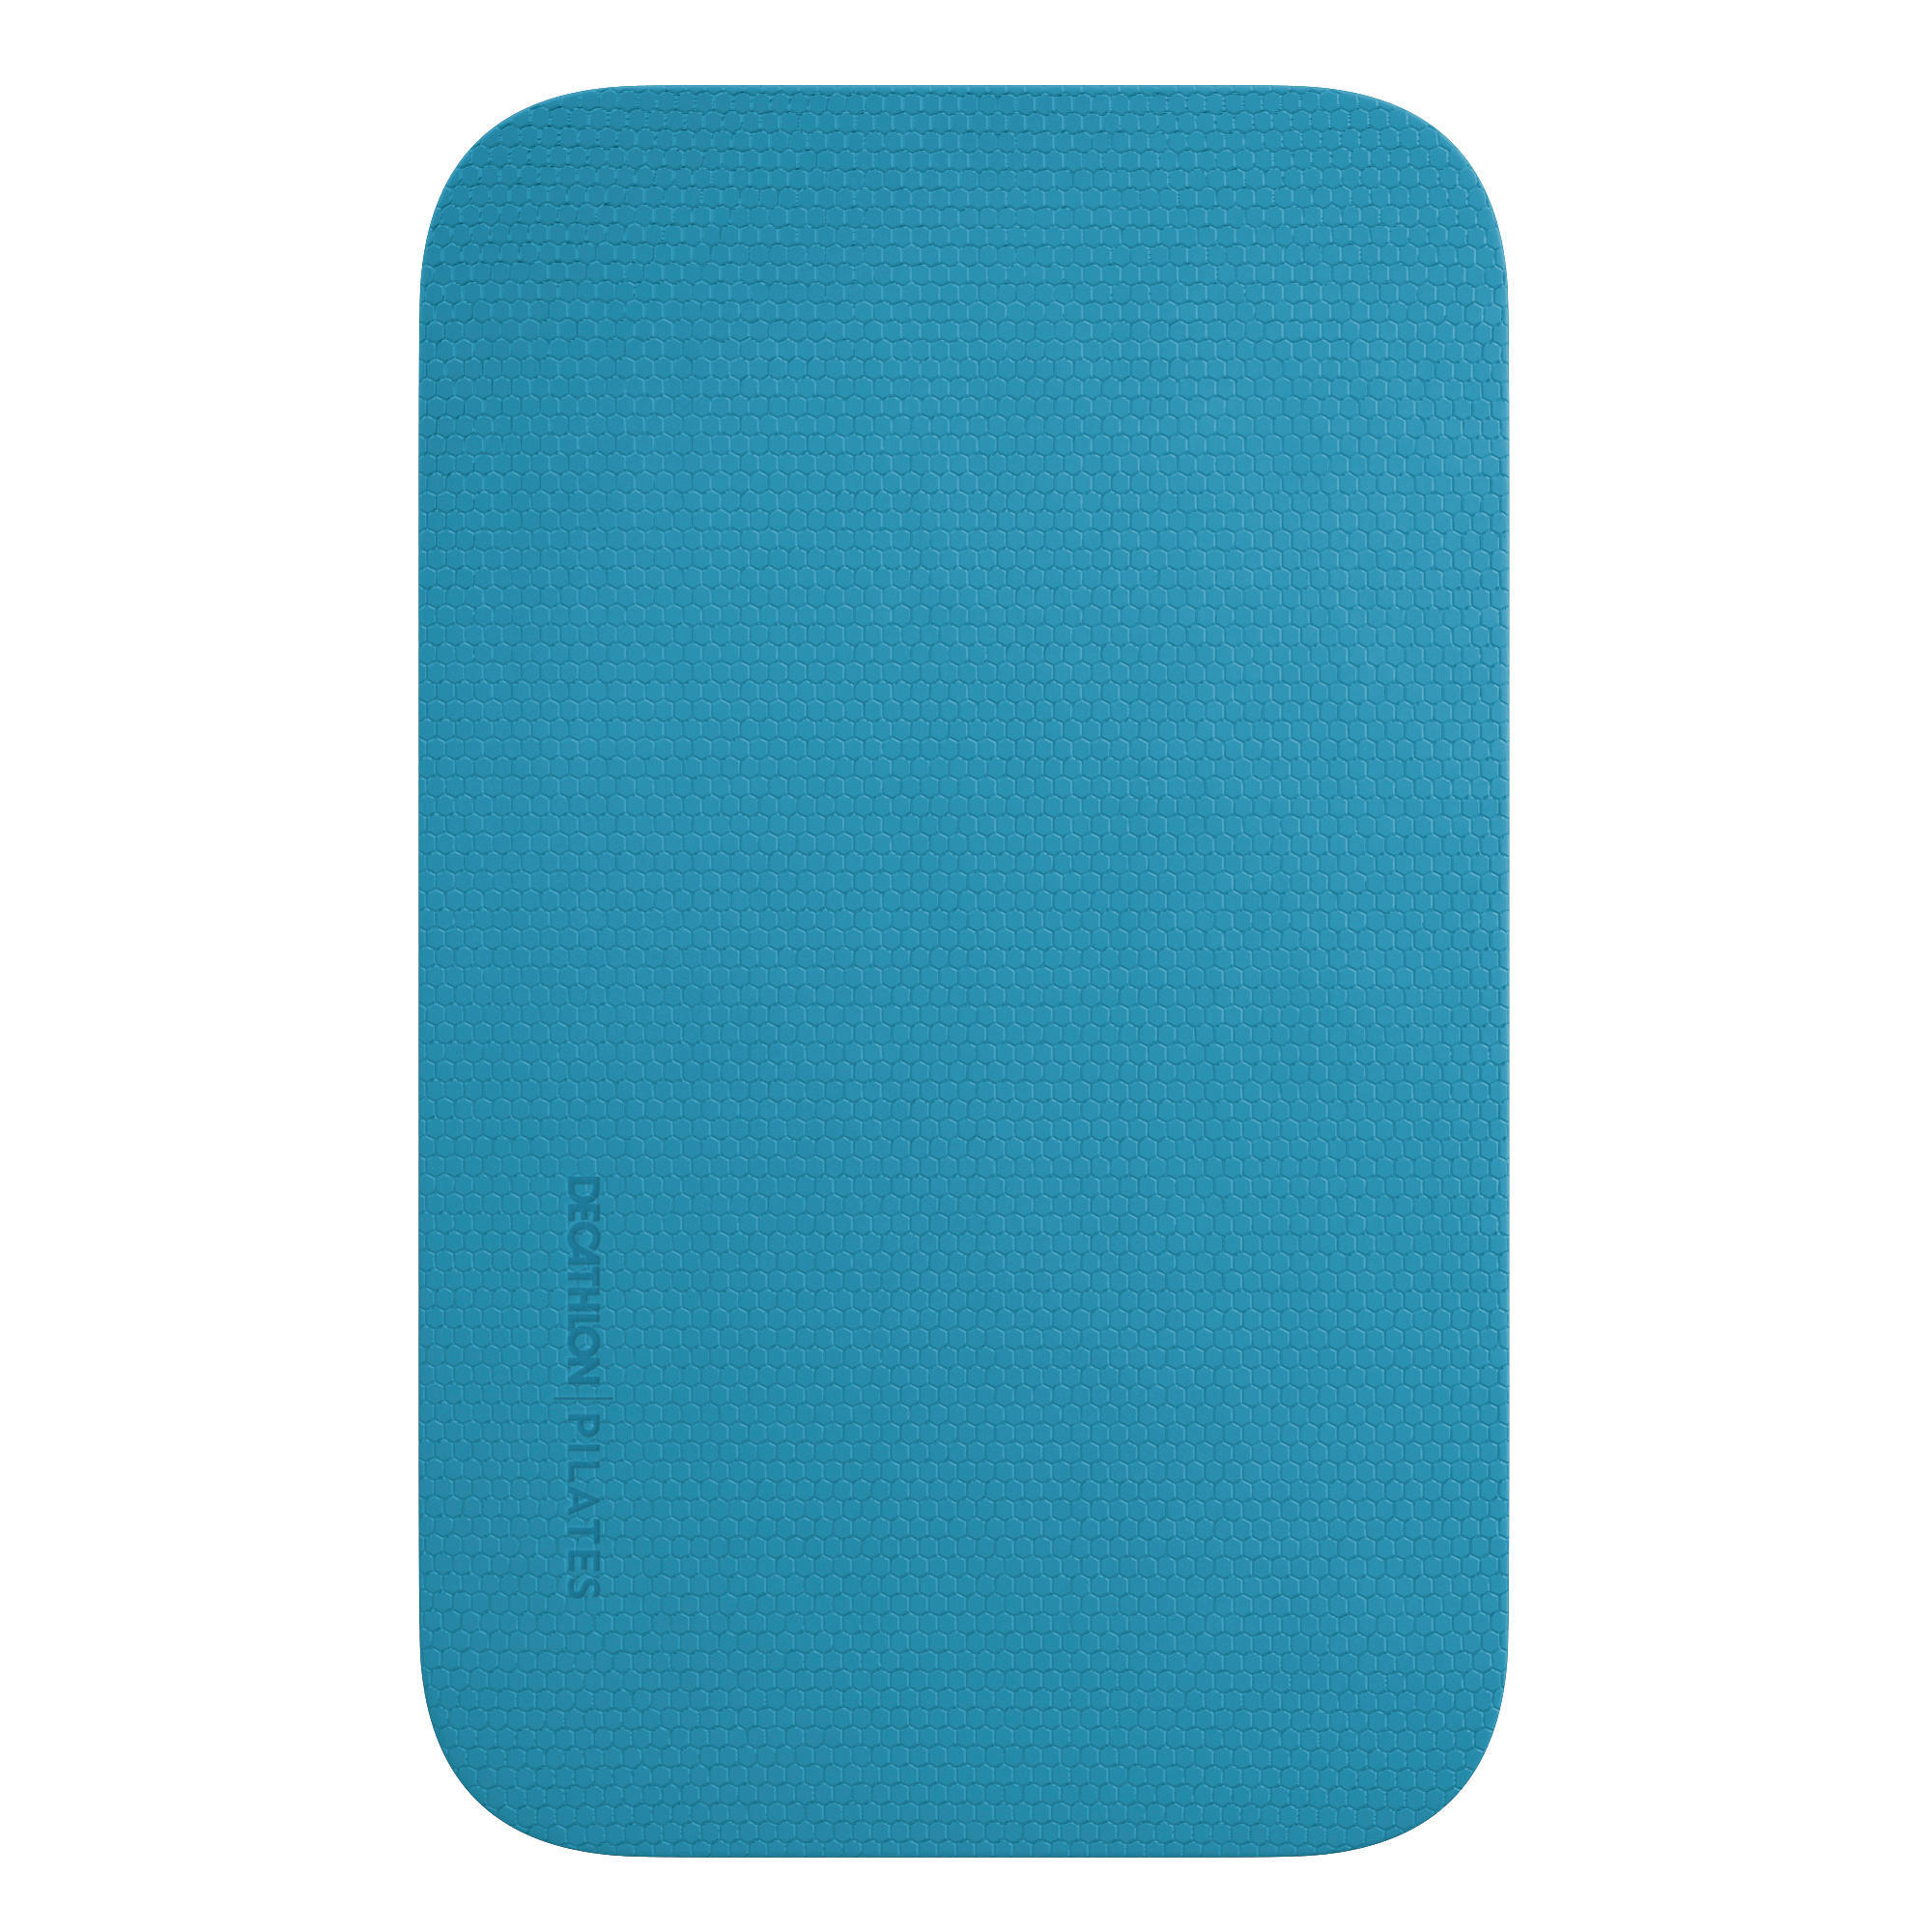 Fitness Small Balance Pad (39 cm x 24 cm x 6 cm) - Blue 2/3